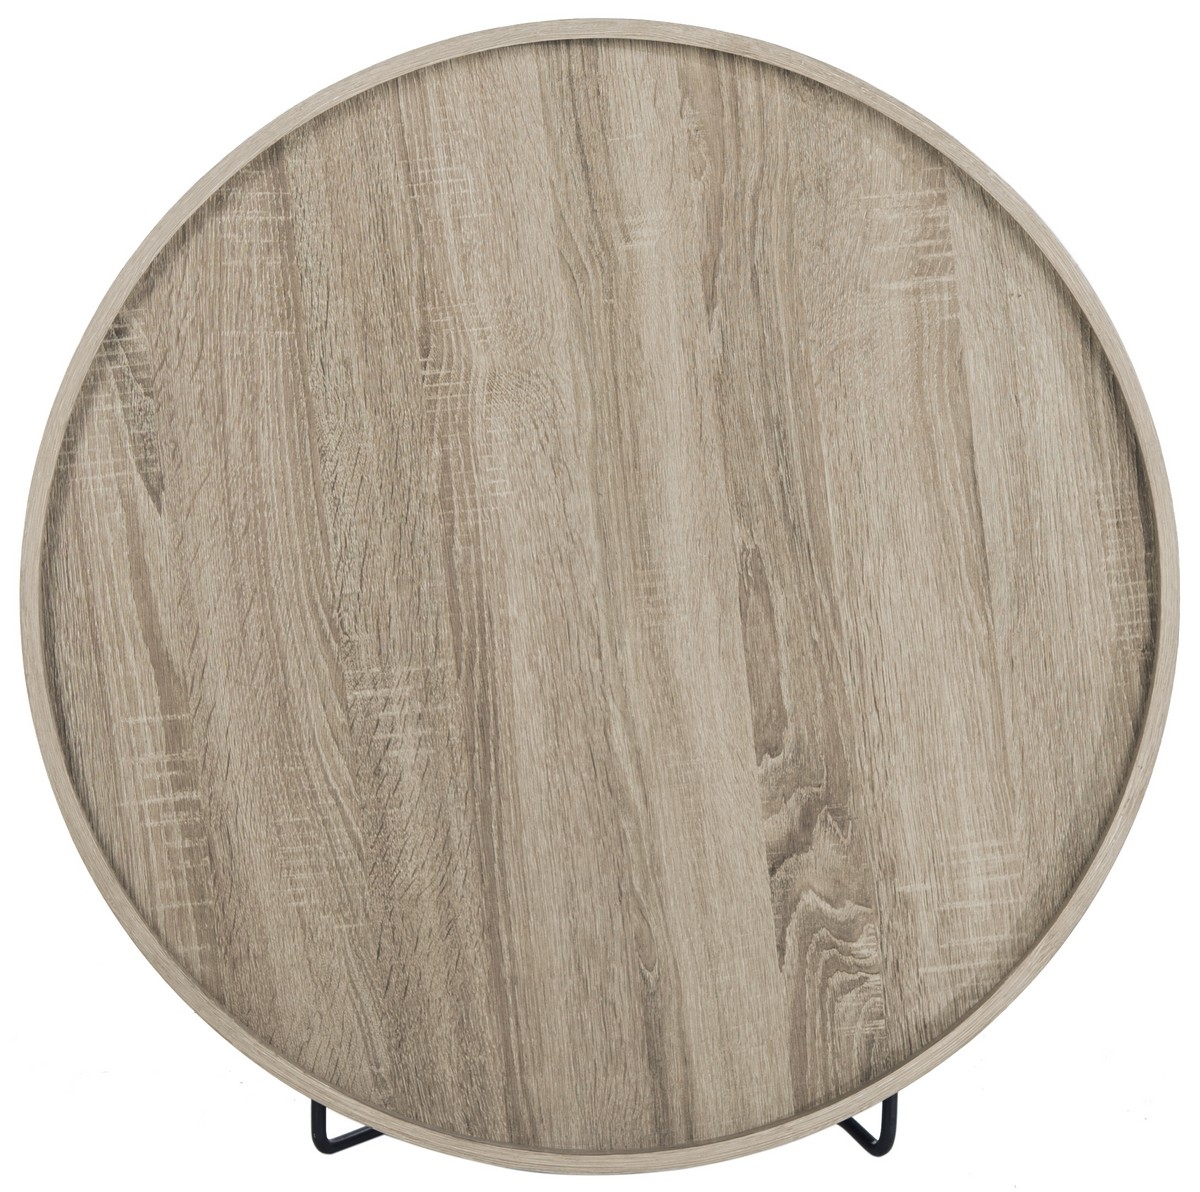 Auden Retro Mid Century Wood Accent Table - Light Oak/Black - Safavieh - Image 1